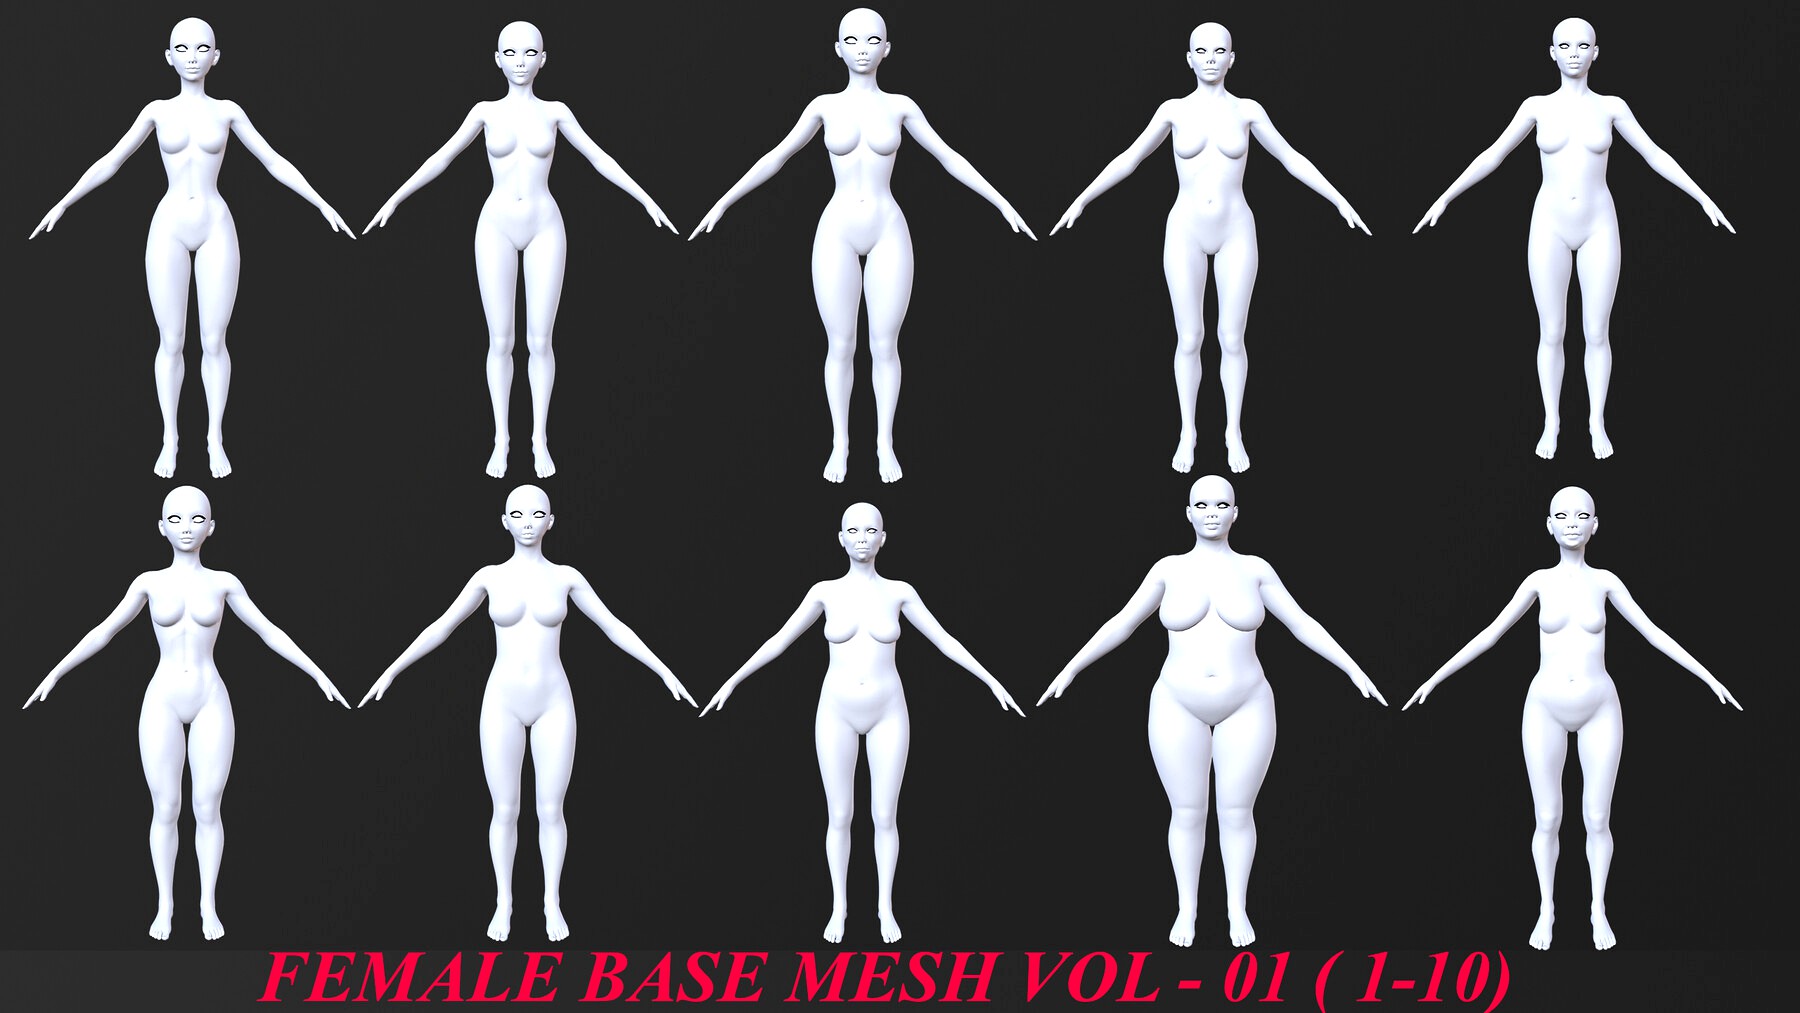 10 FEMALE BASE MESH 1-10